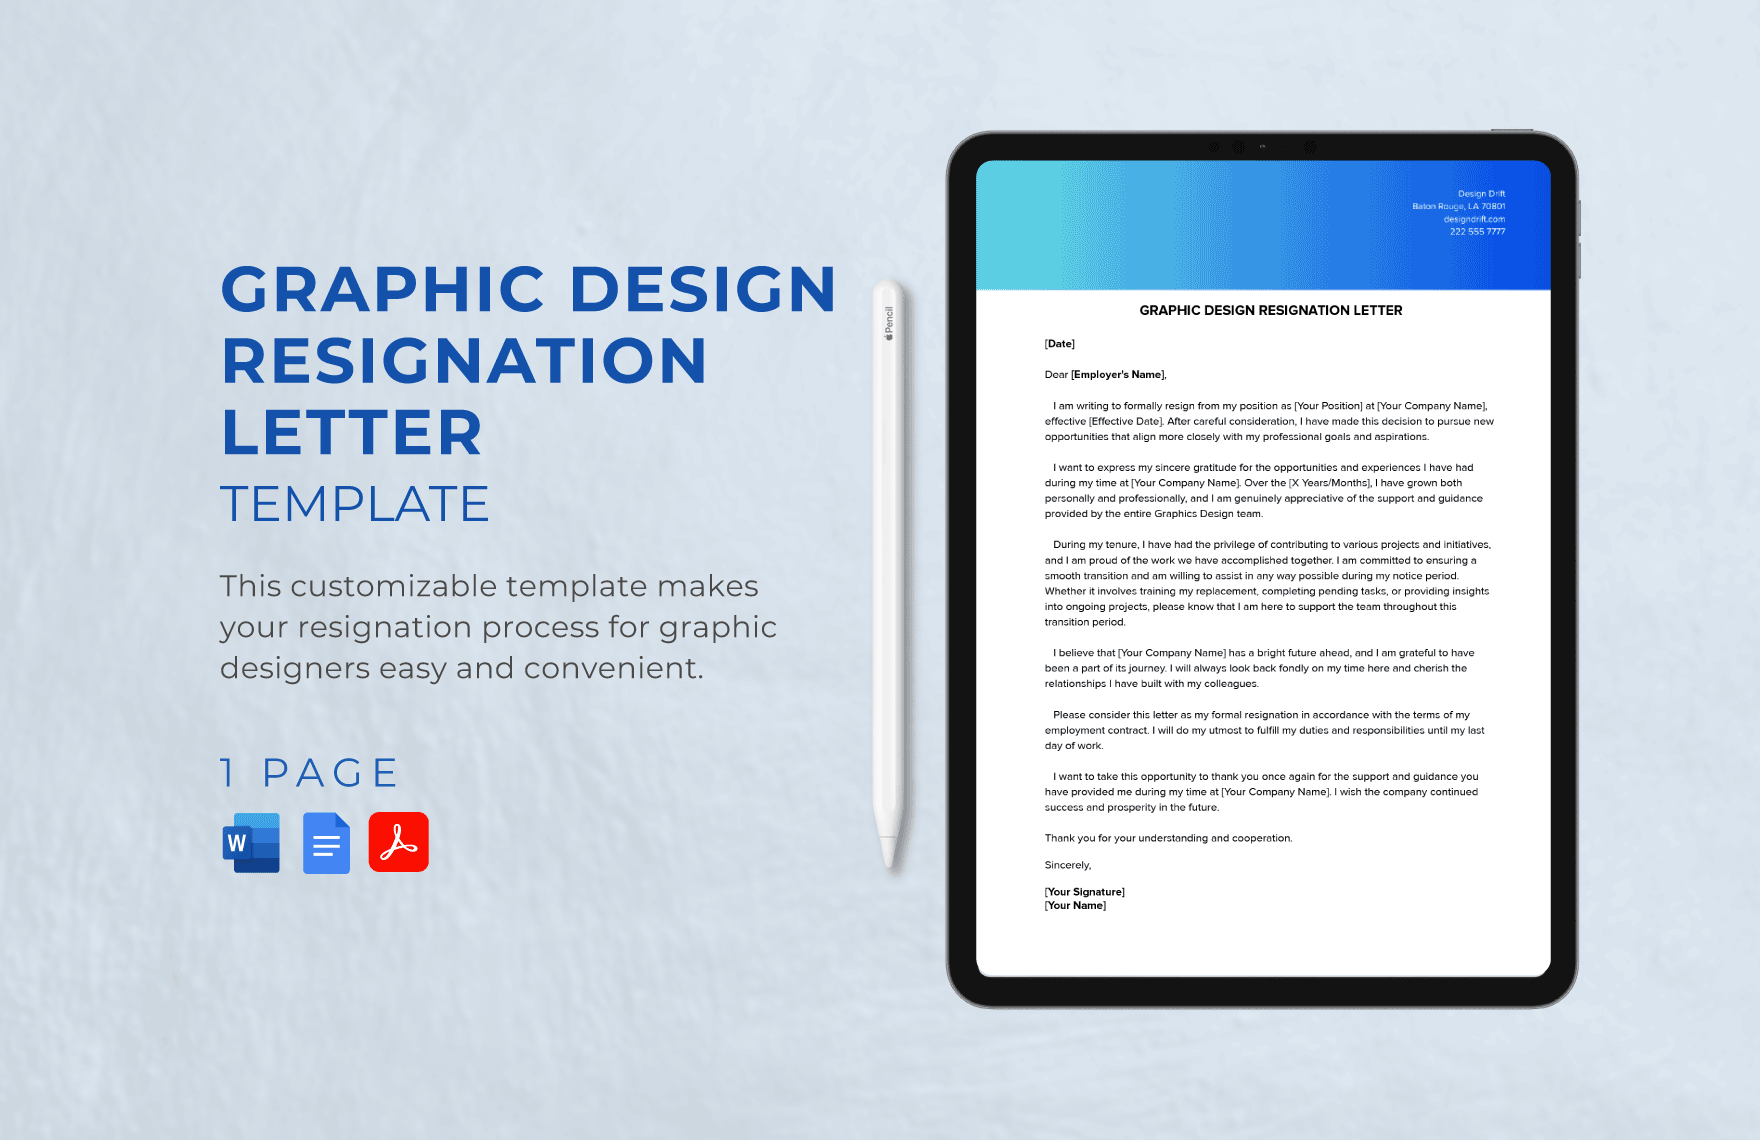 Graphic Design Resignation Letter Template in Word, Google Docs, PDF